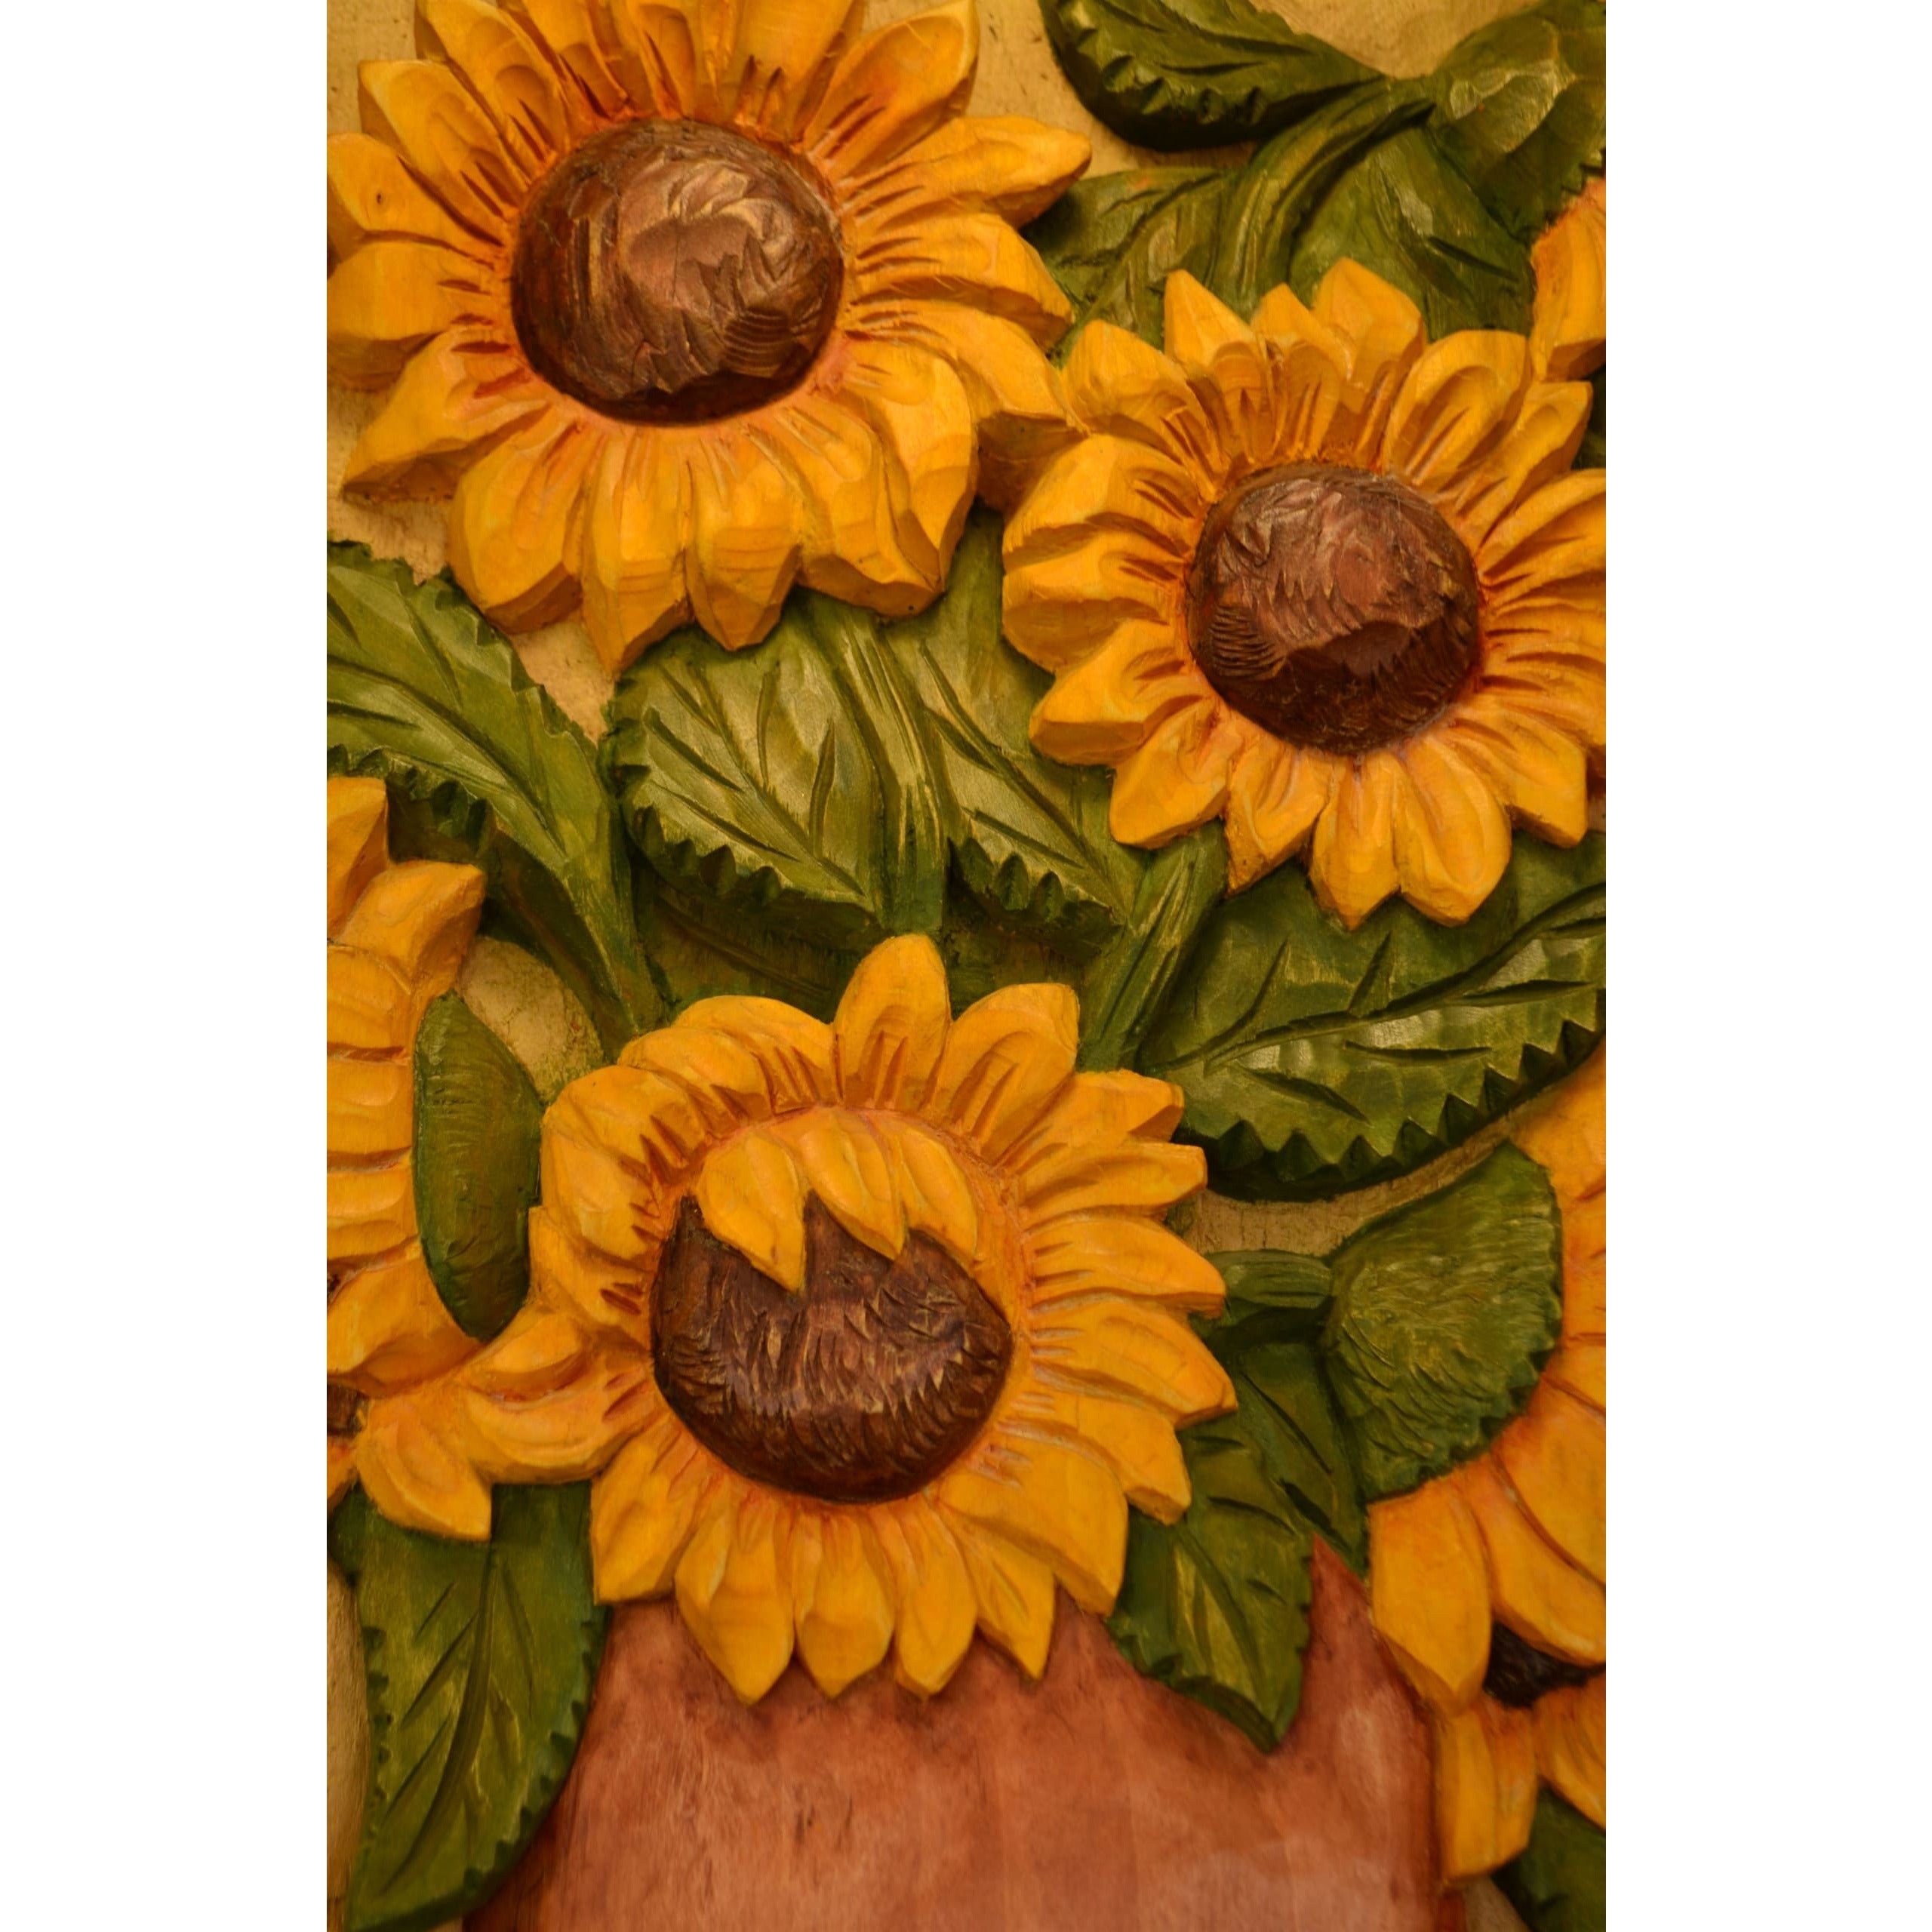 Sunflowers sculpture